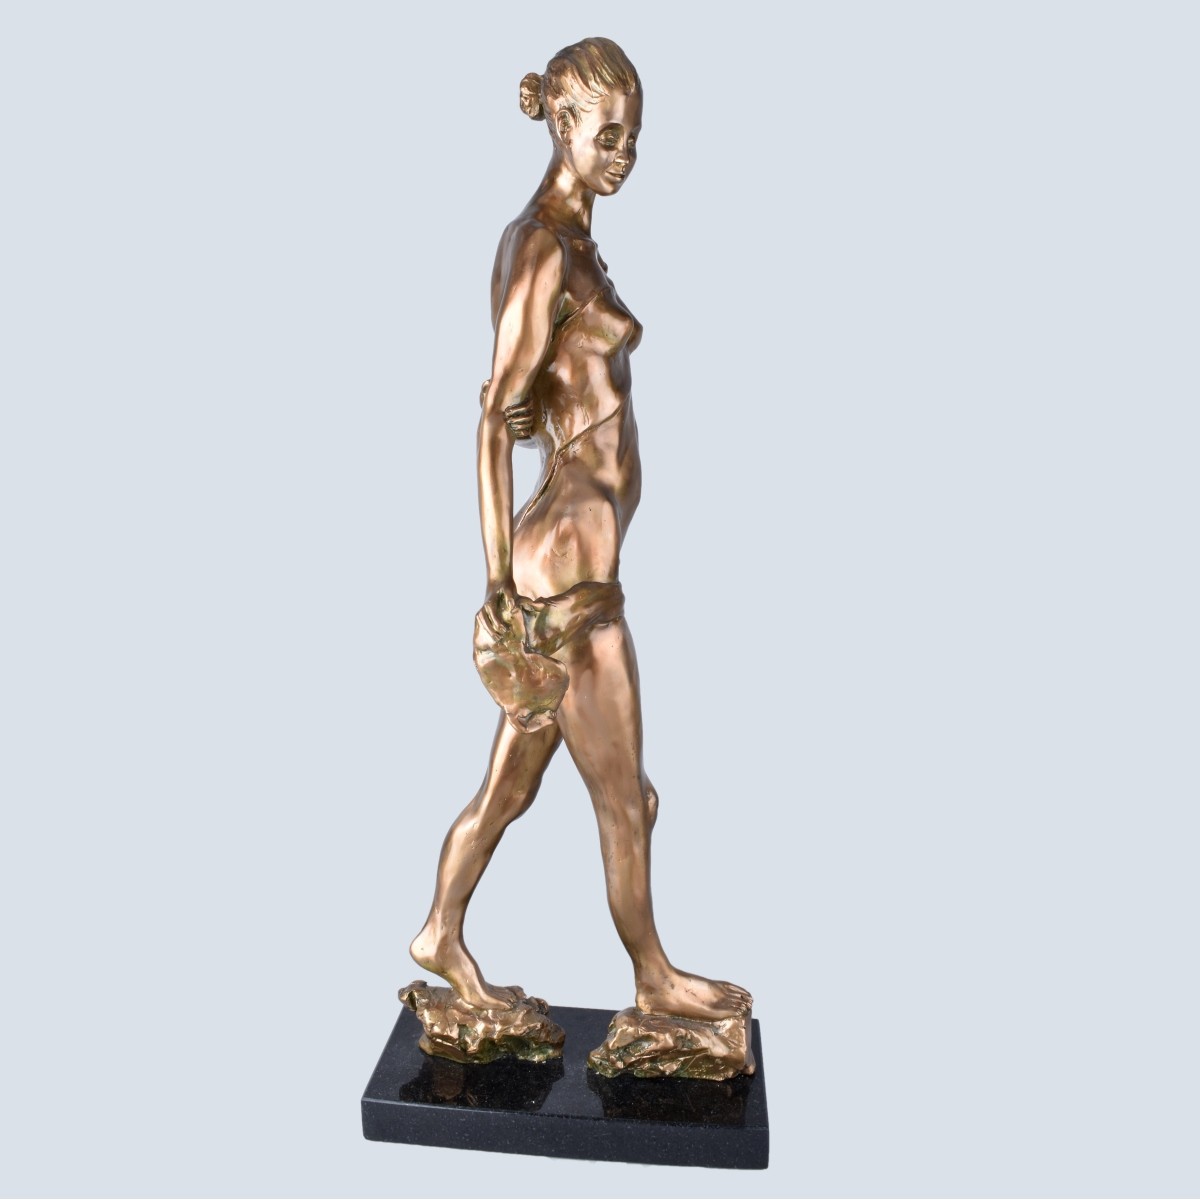 Stephanie S. Conrad Bronze Sculpture